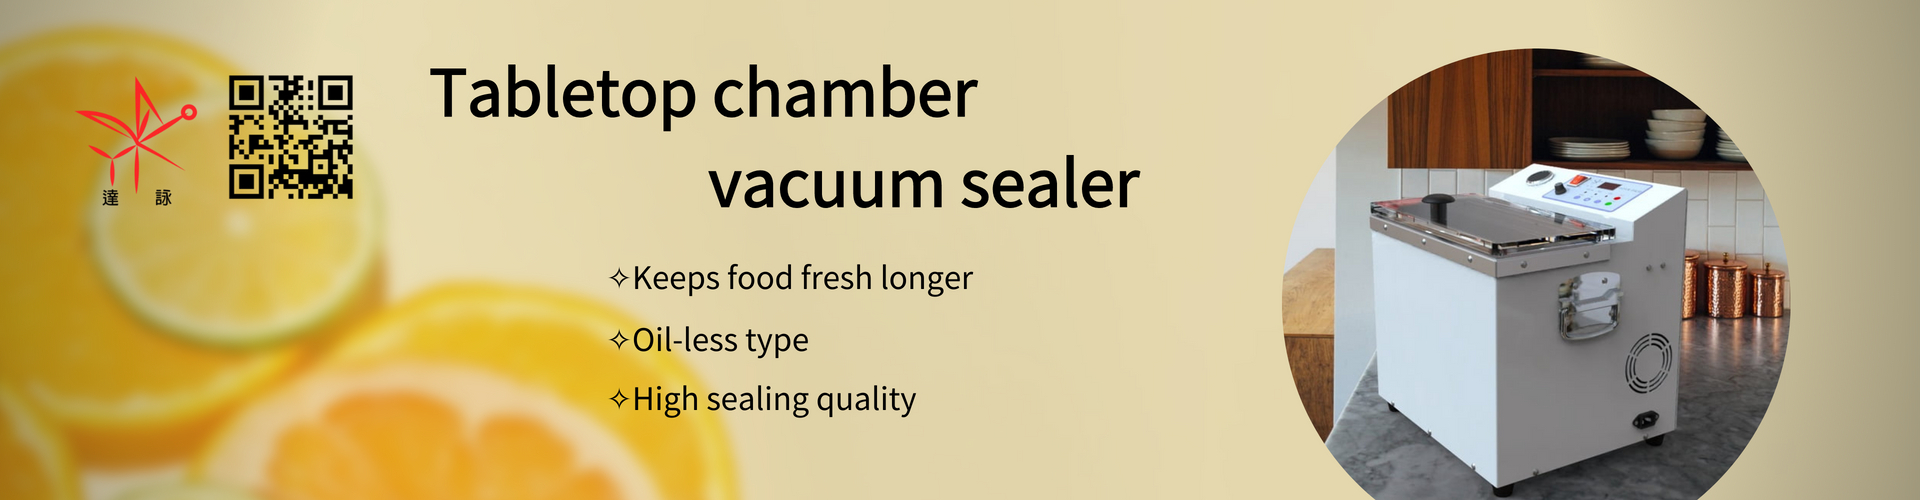 Tabletop chamber vacuum sealer(oil-less type)